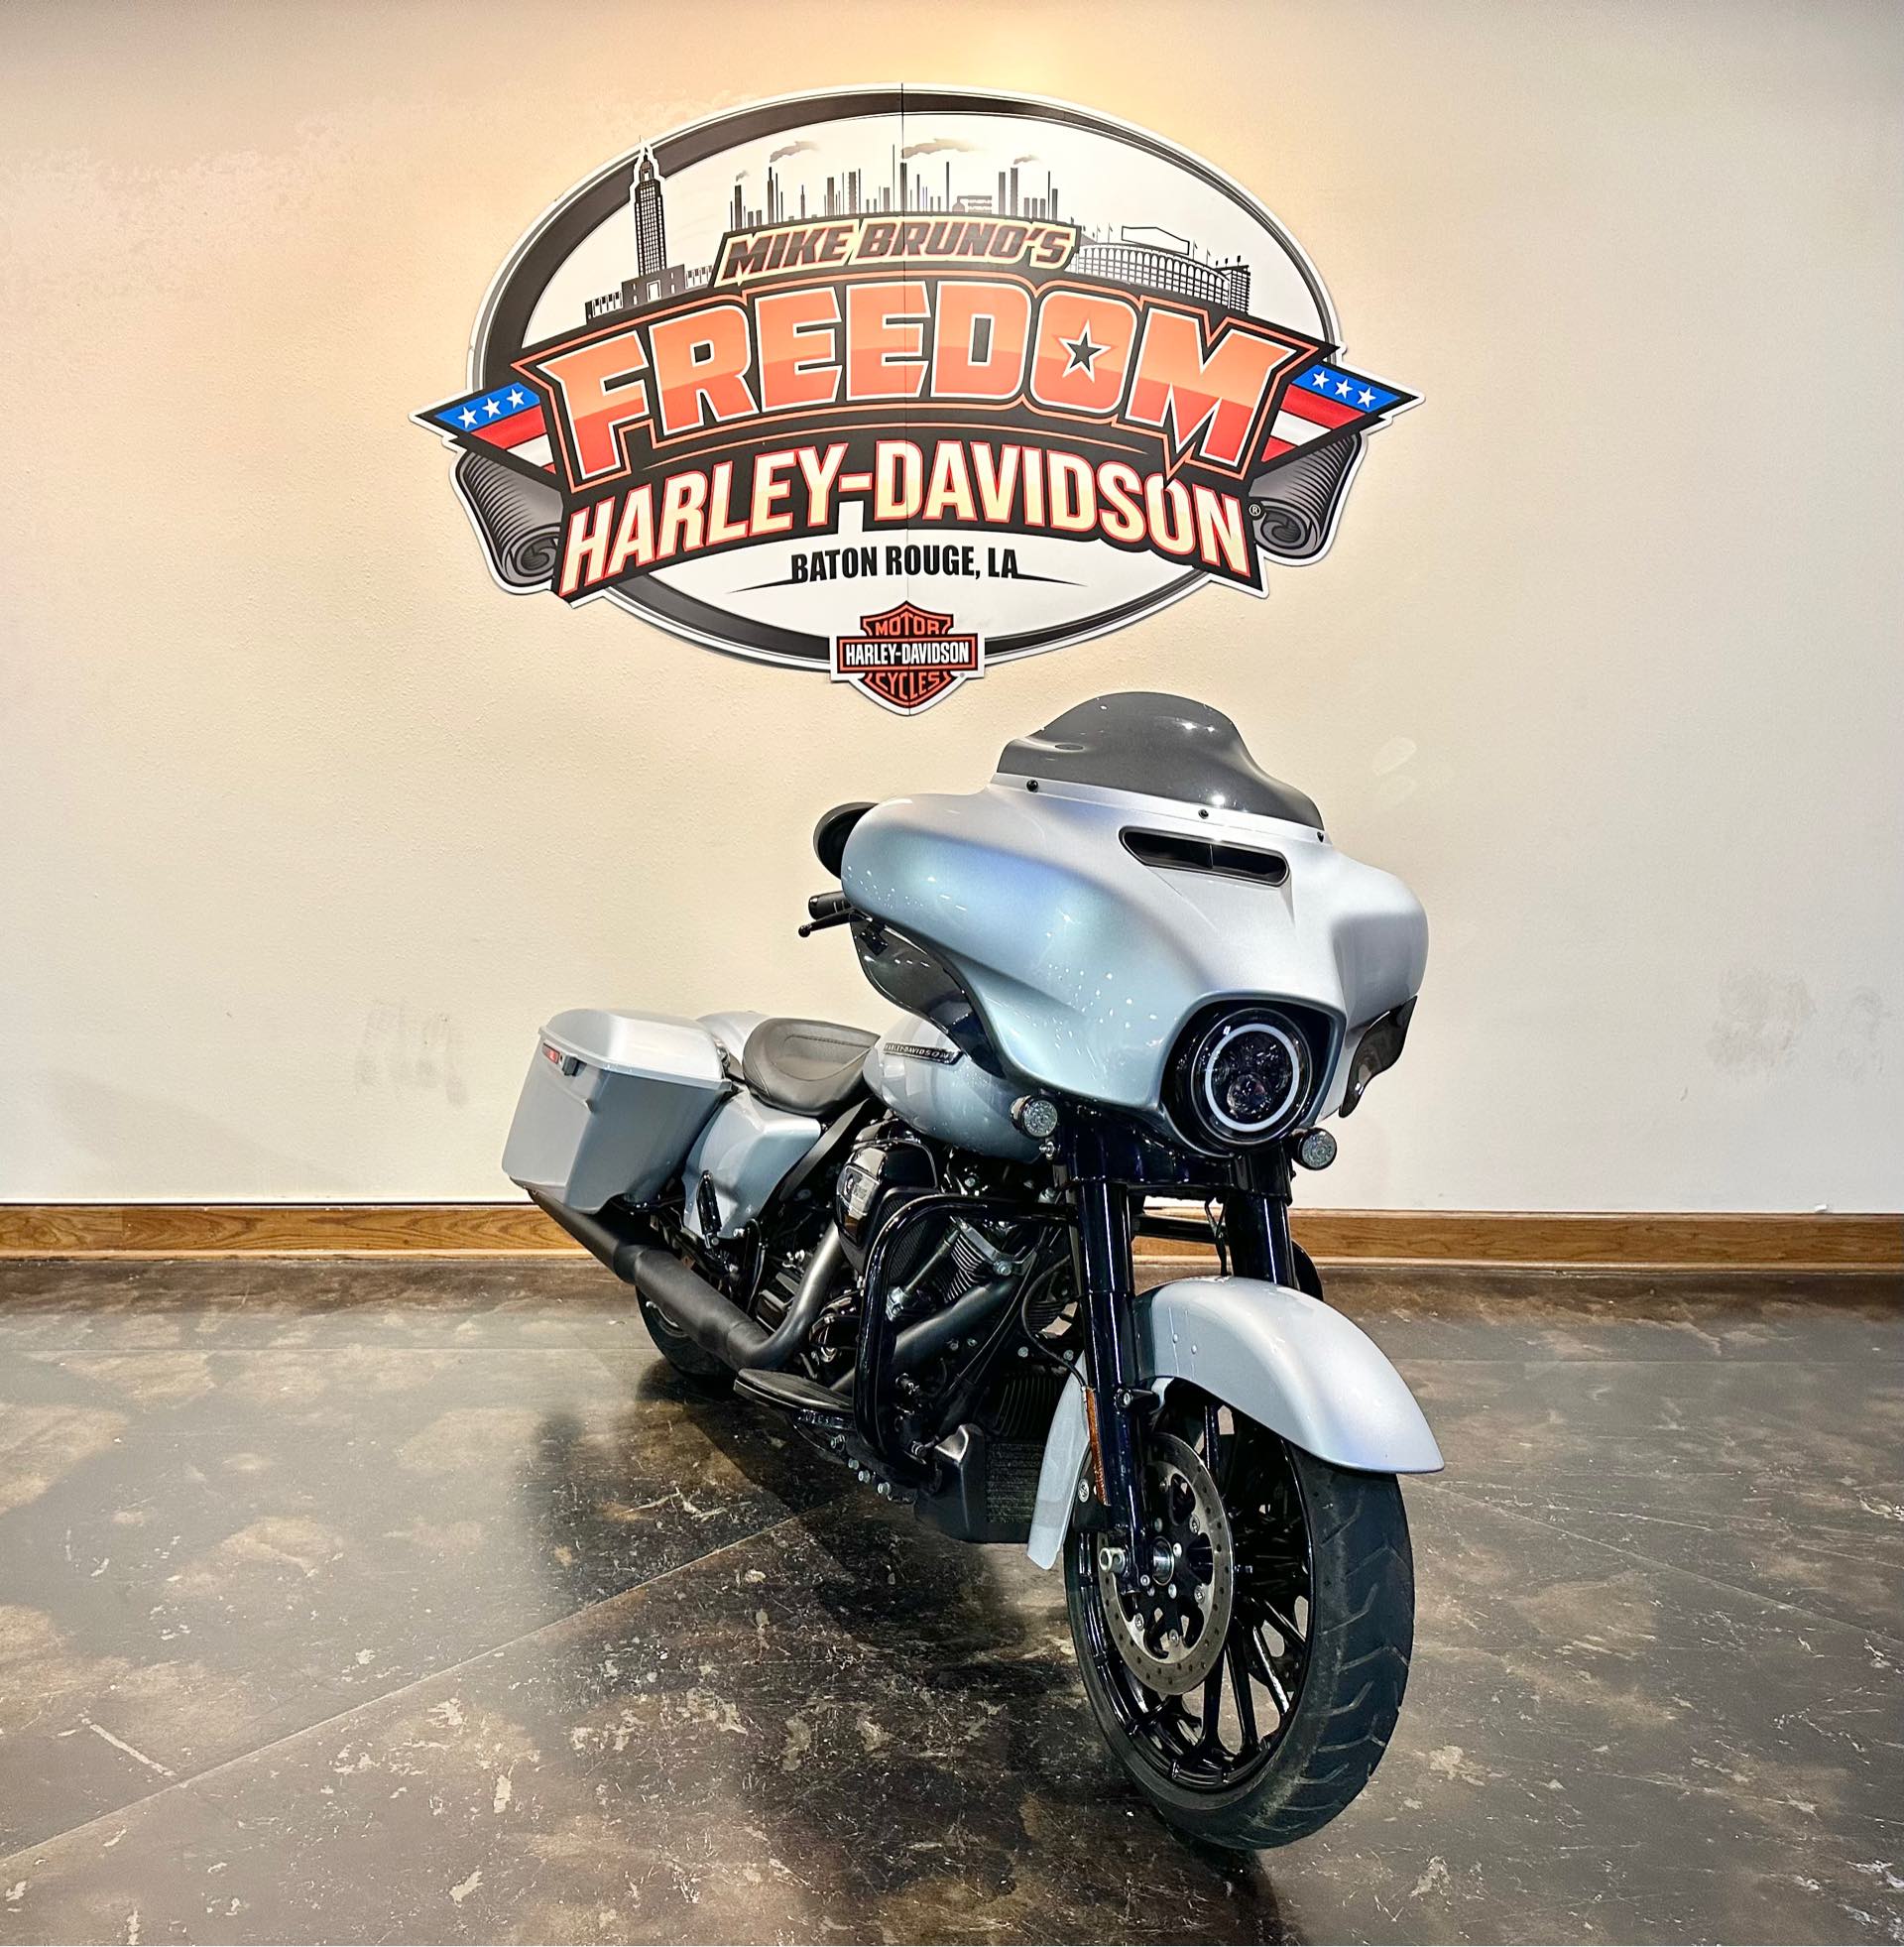 2019 Harley-Davidson Street Glide Special at Mike Bruno's Freedom Harley-Davidson